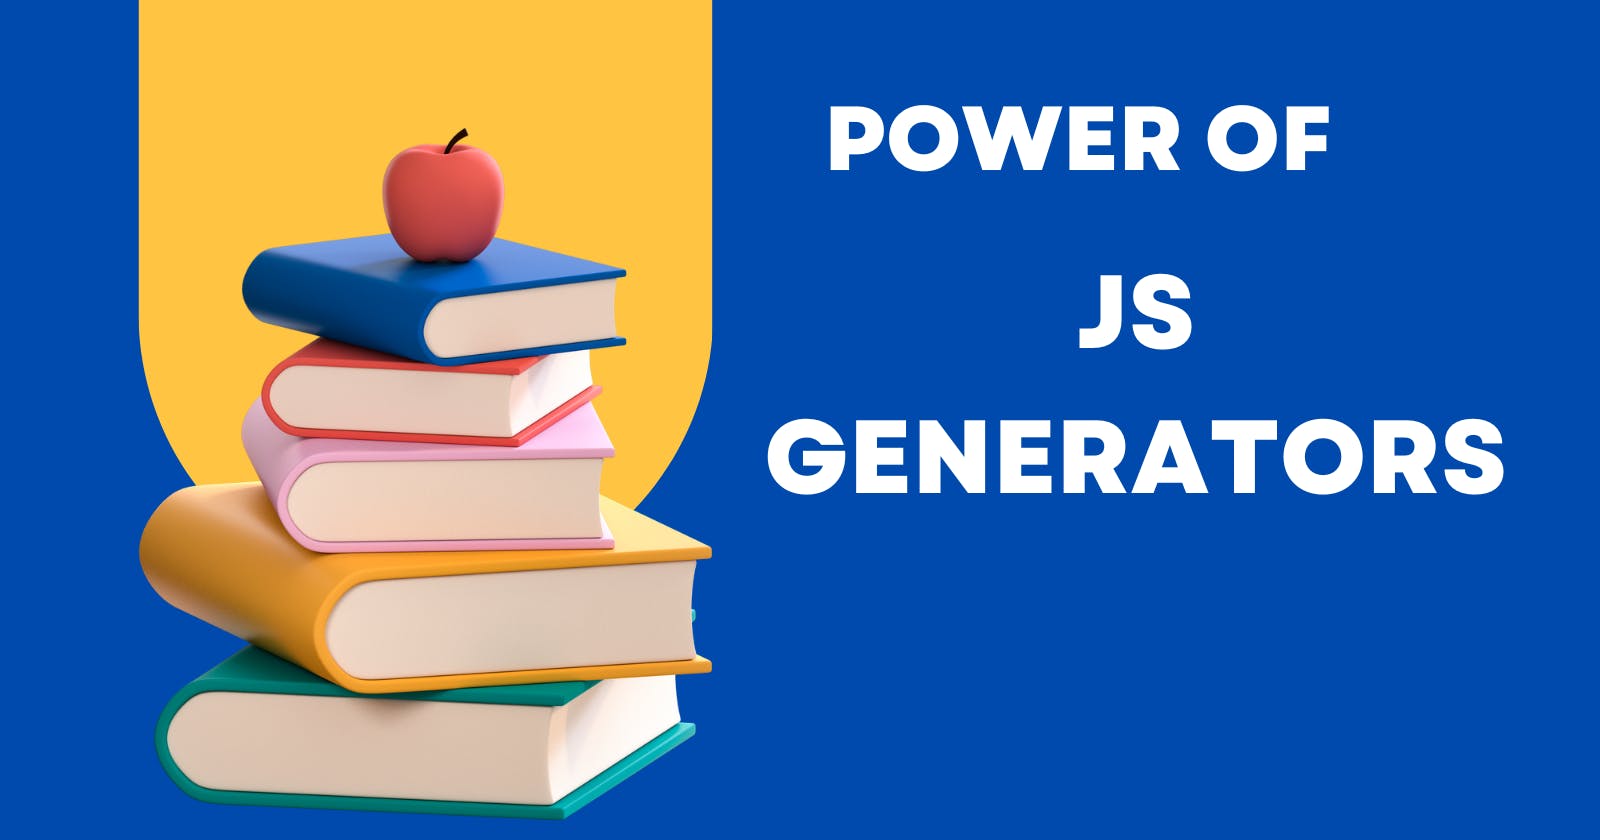 Power of JS Generators